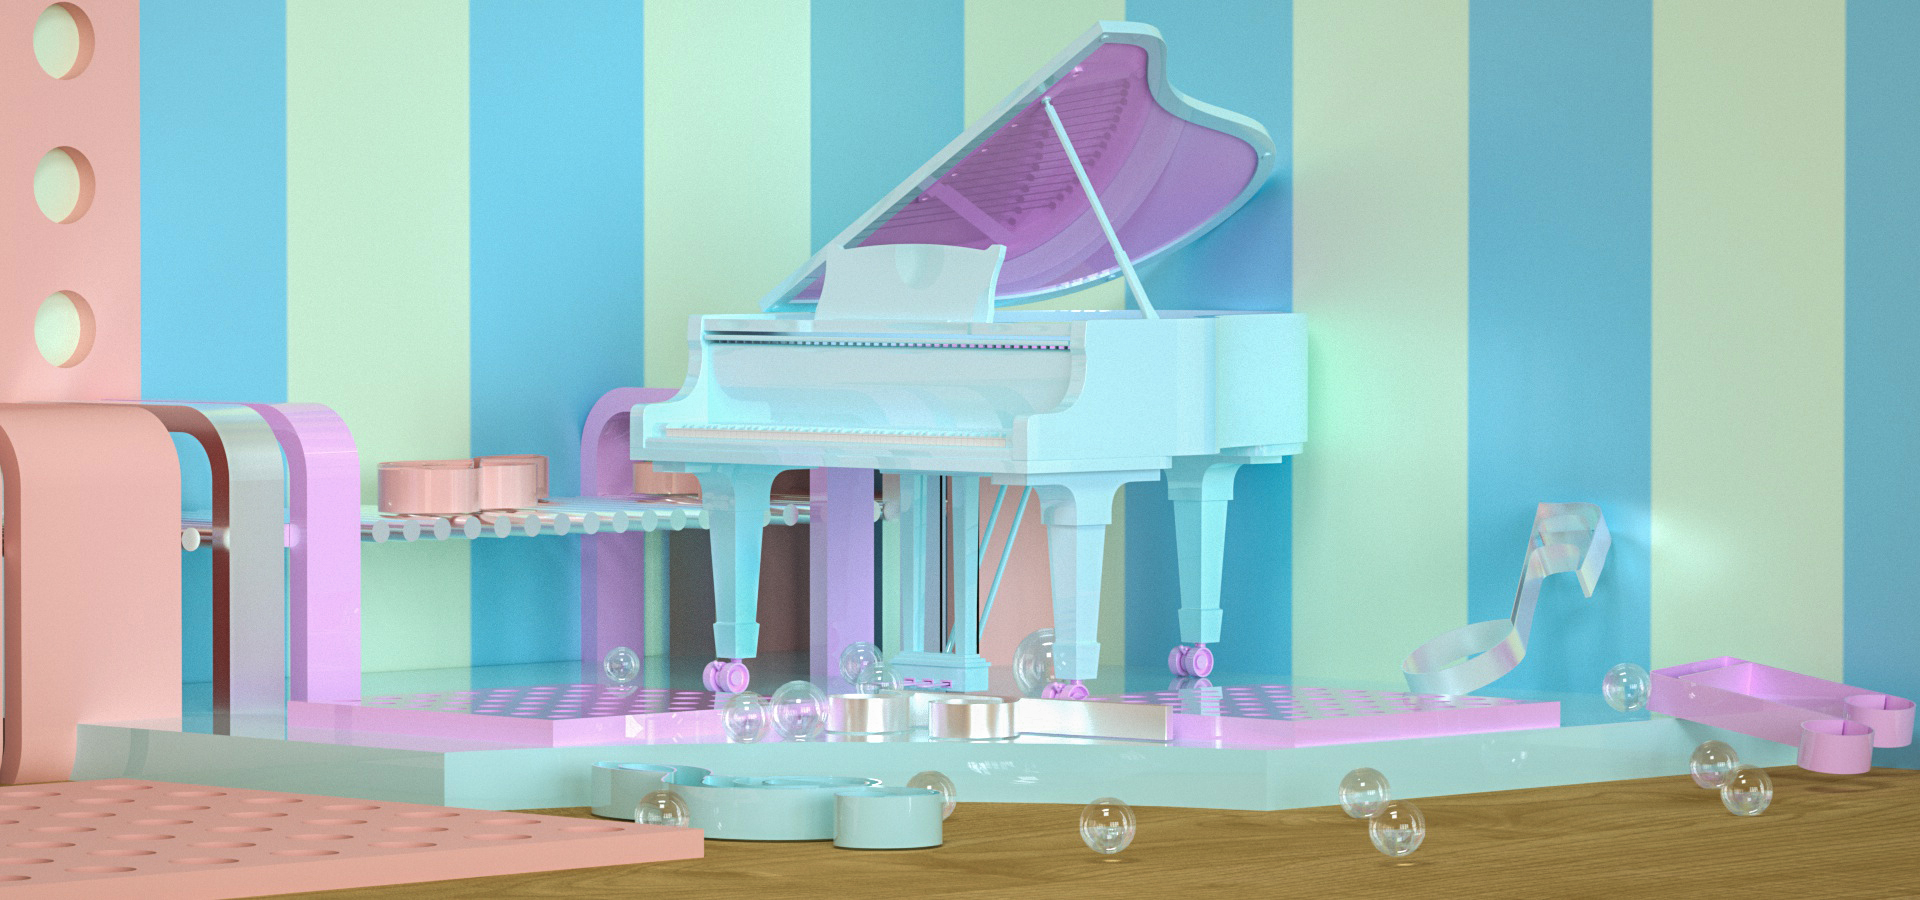 C4D模型音乐符号钢琴立体3d渲染C4D模型音乐符号钢琴立体3d渲染.jpg